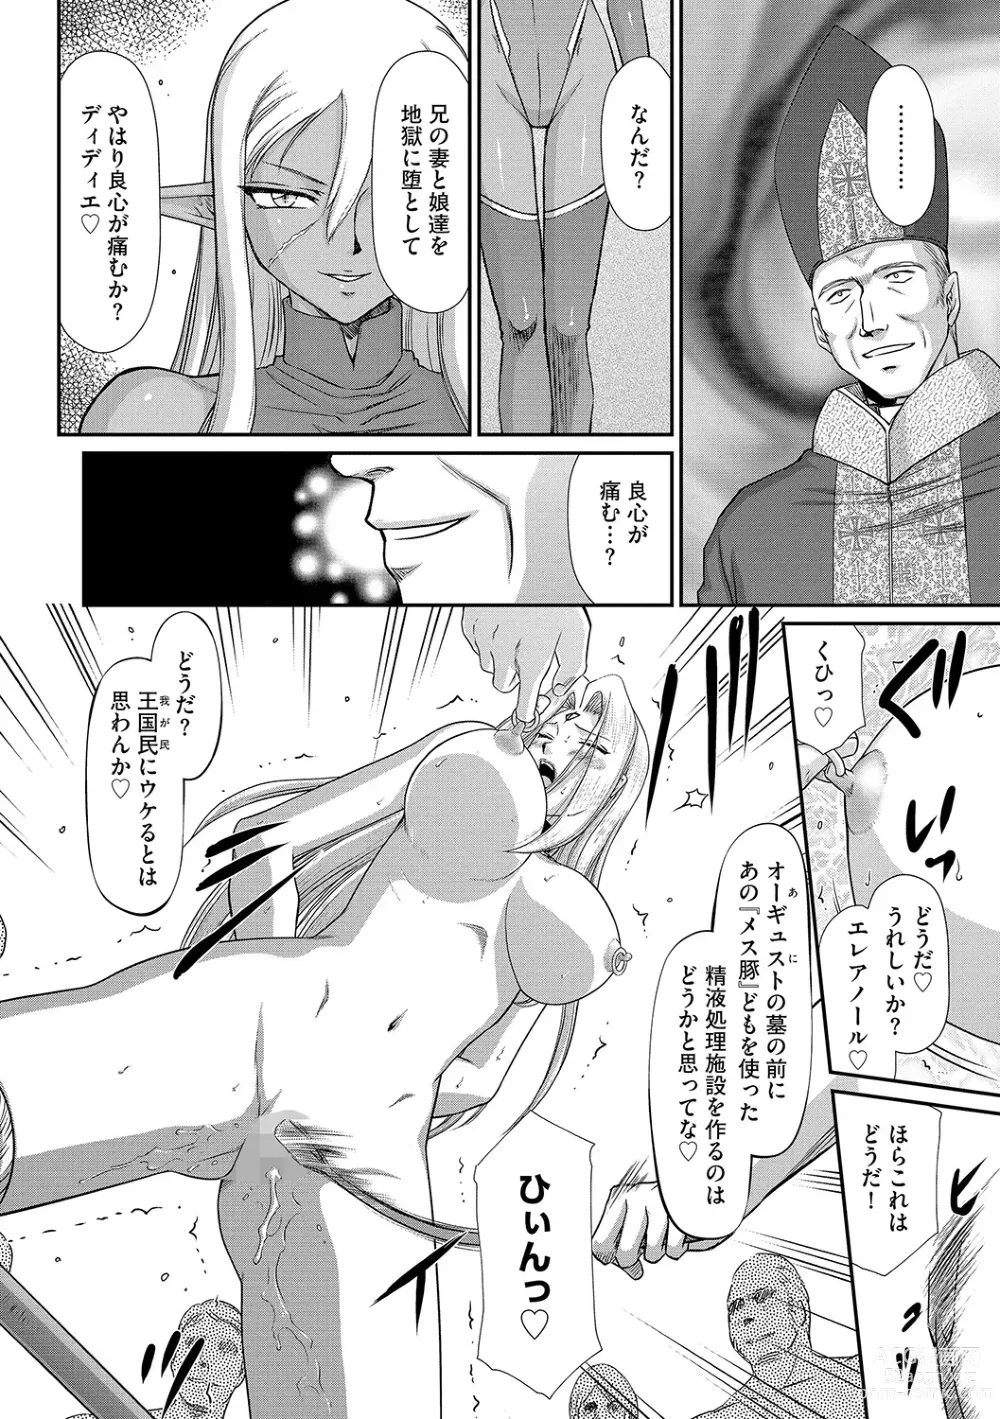 Page 188 of manga Hakudaku Senki Eleanor